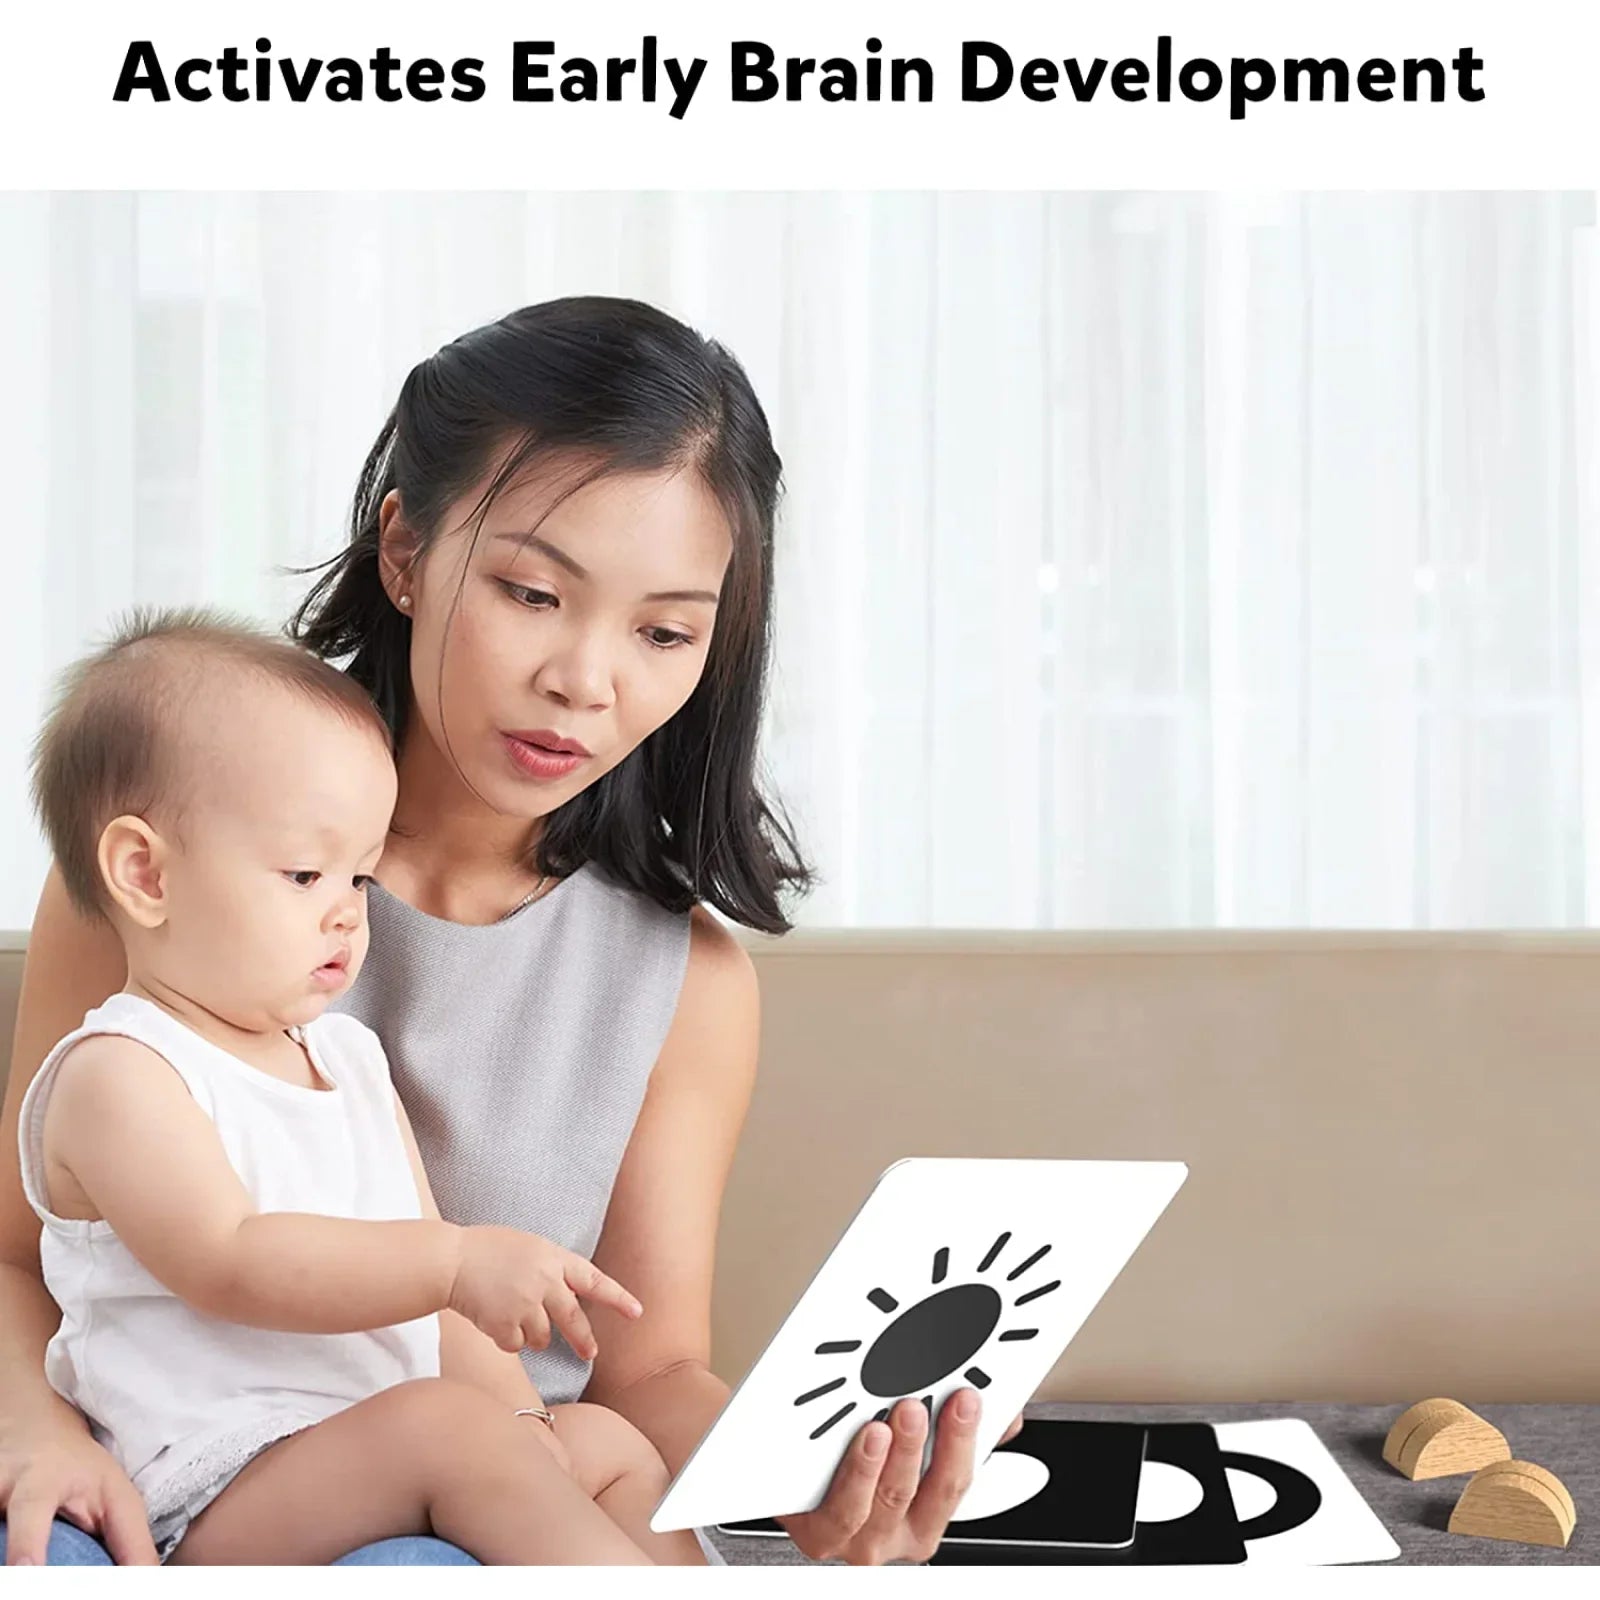 Engaging Infant Set (ages 0-2)